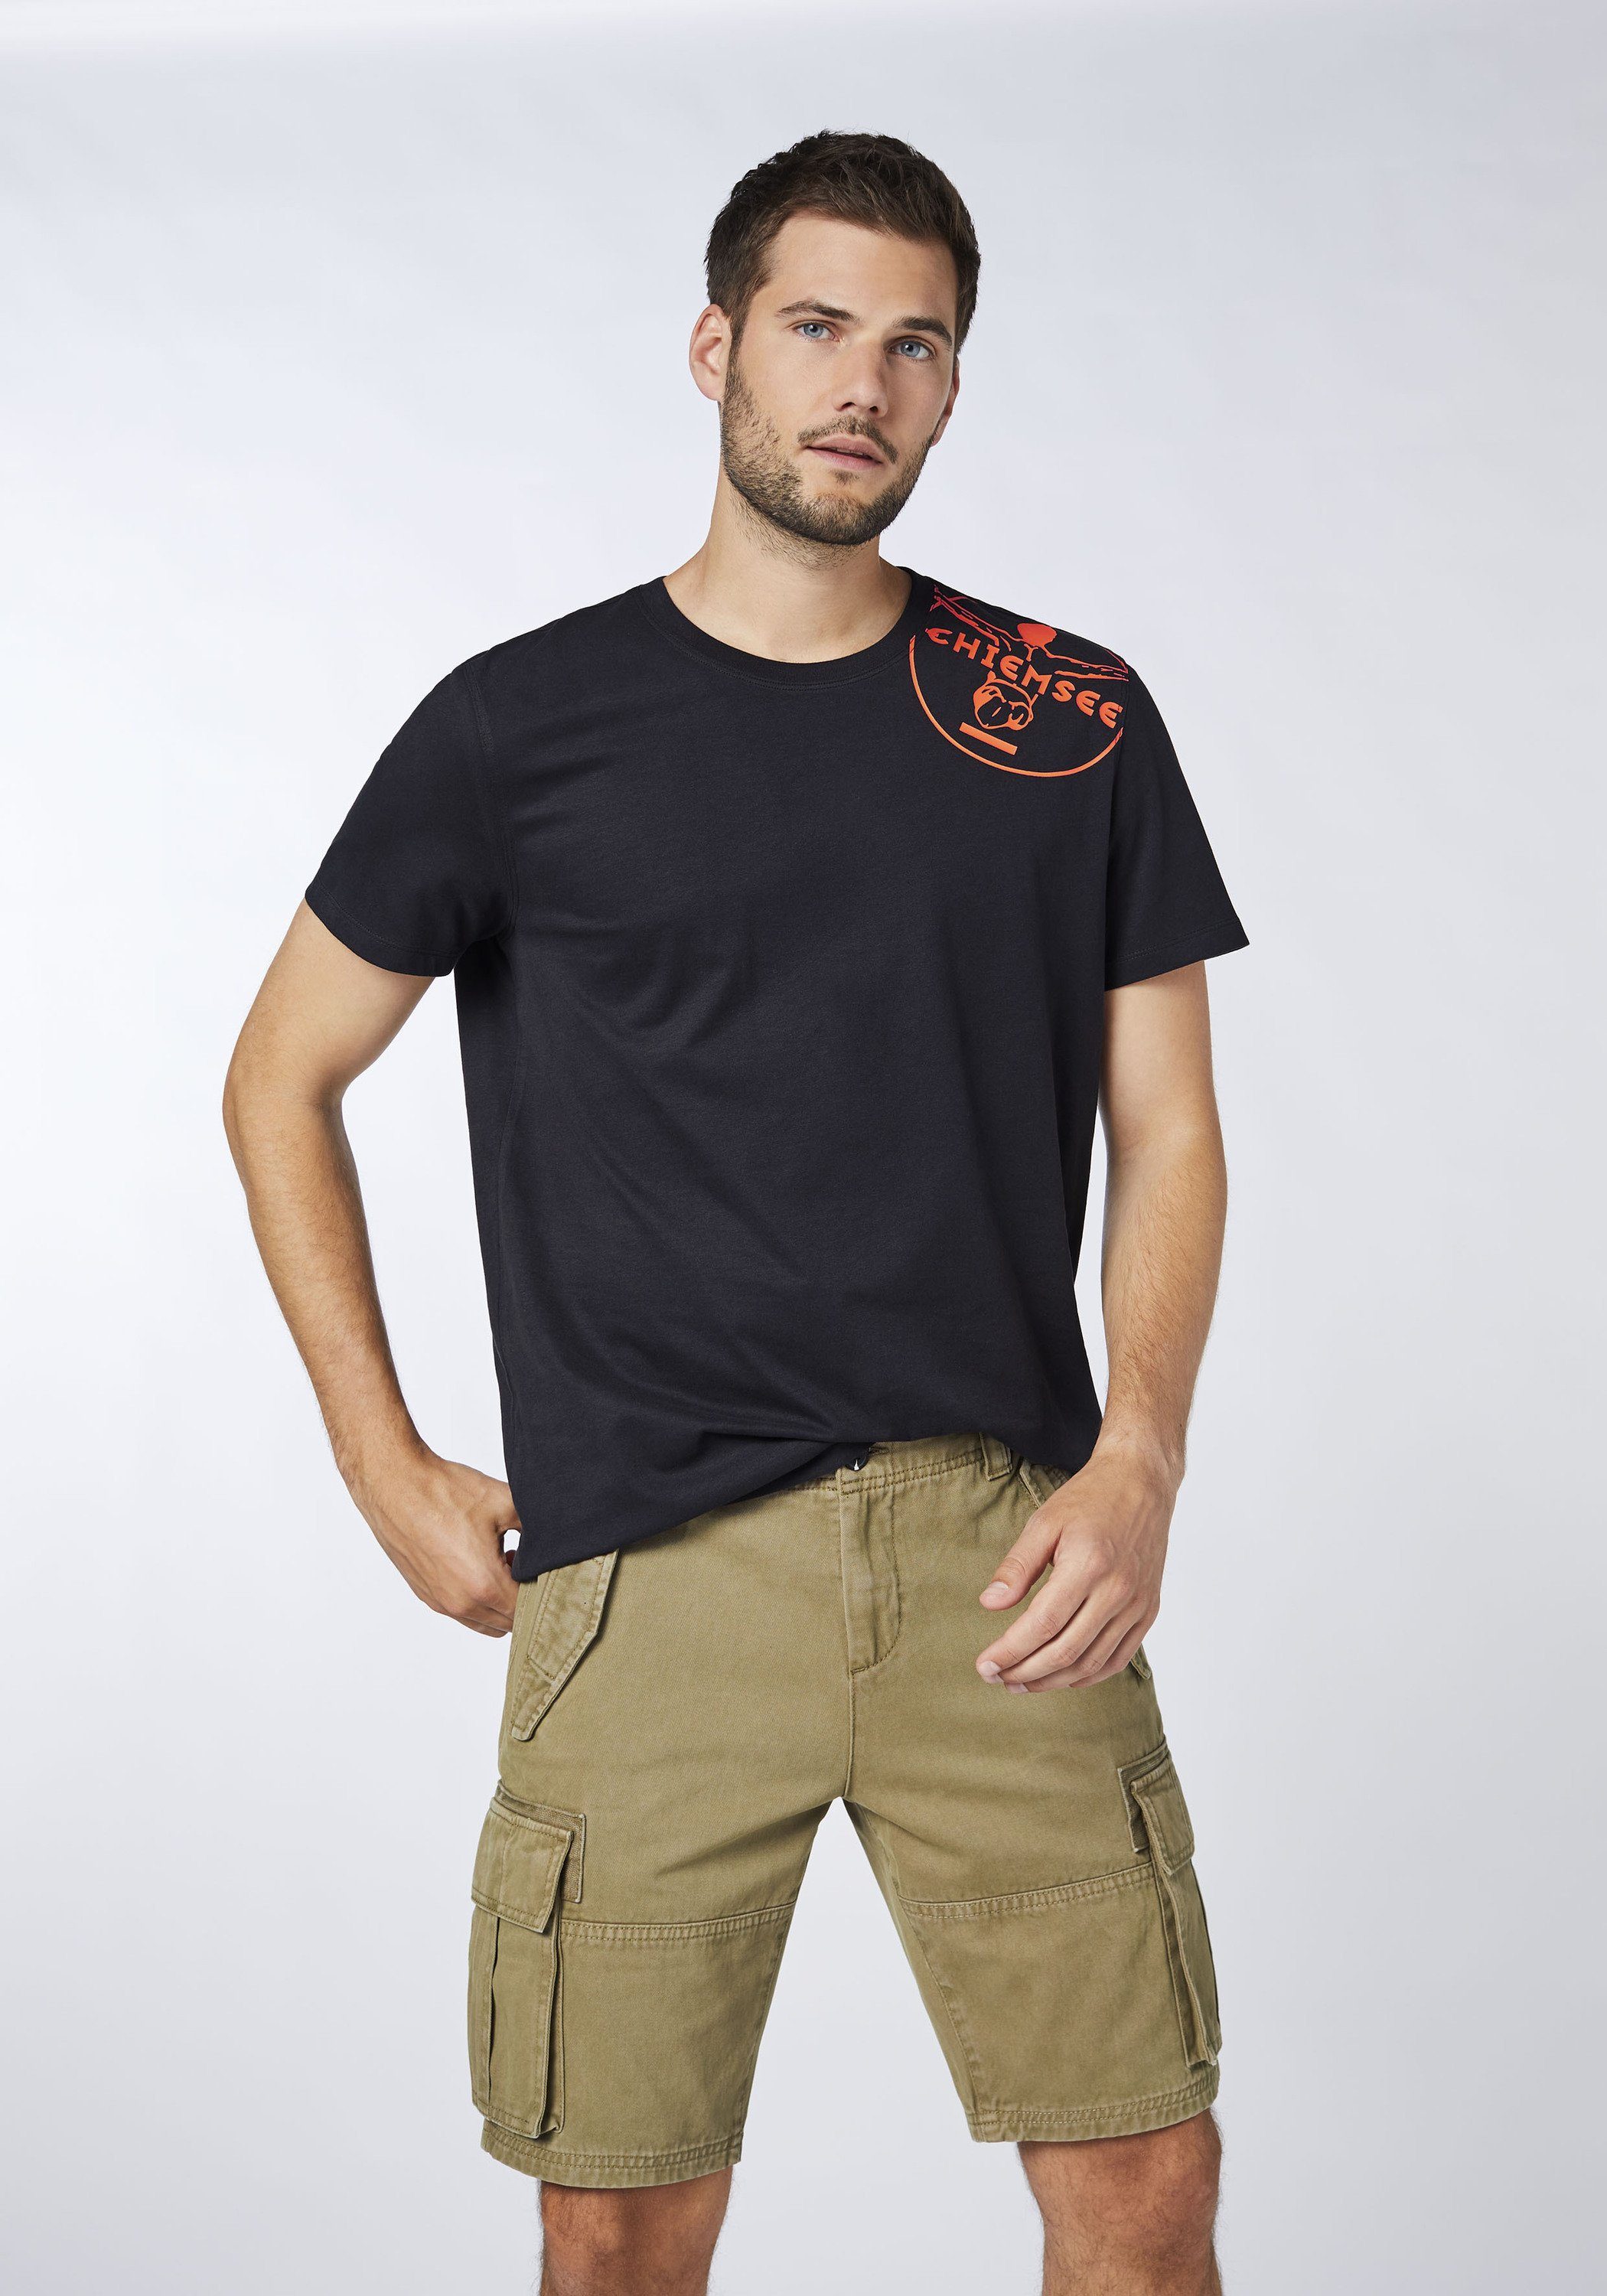 T-Shirt 1 mit Print-Shirt Jumper-Motiv Black Deep Chiemsee